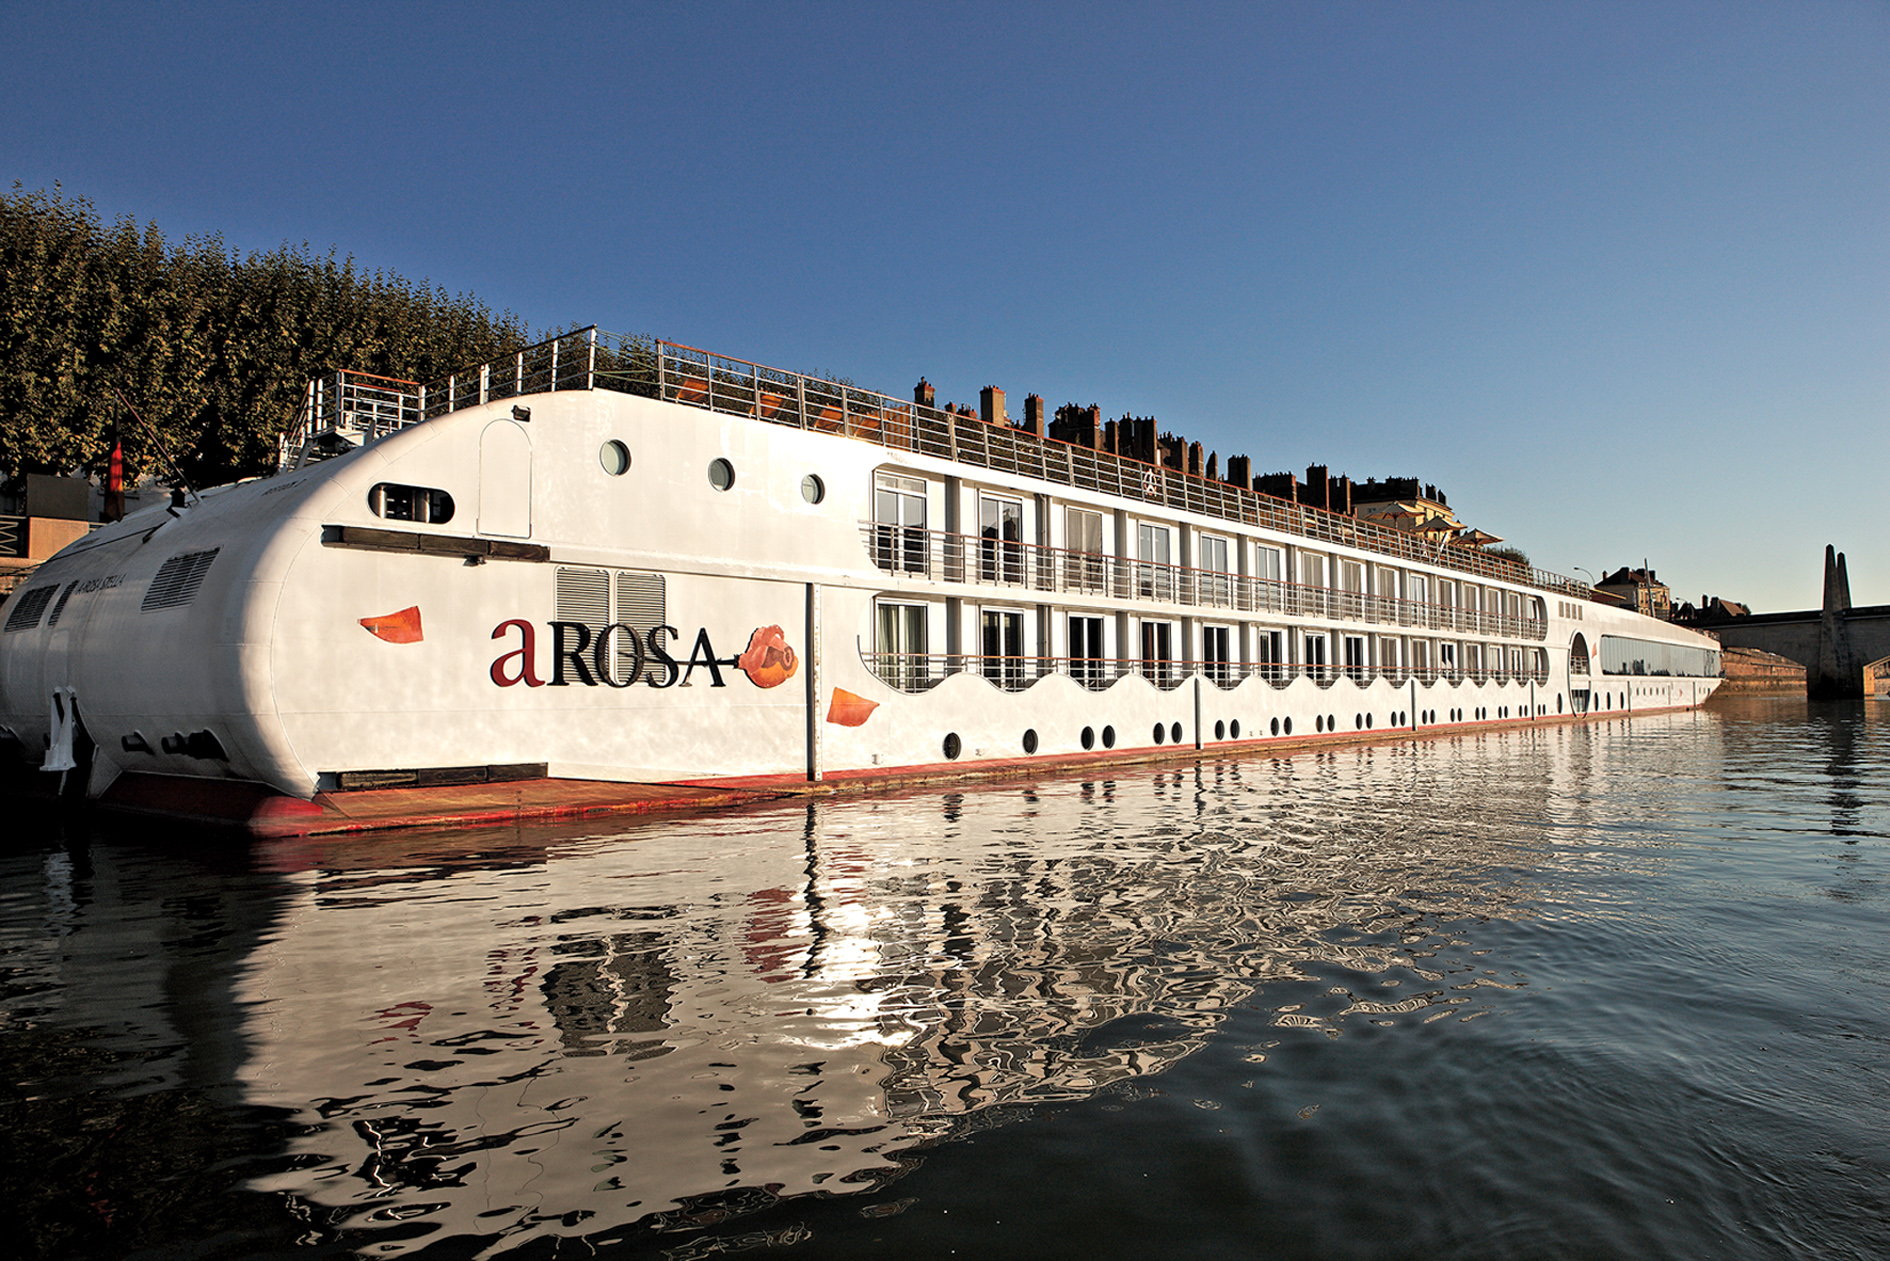 arosa river cruises